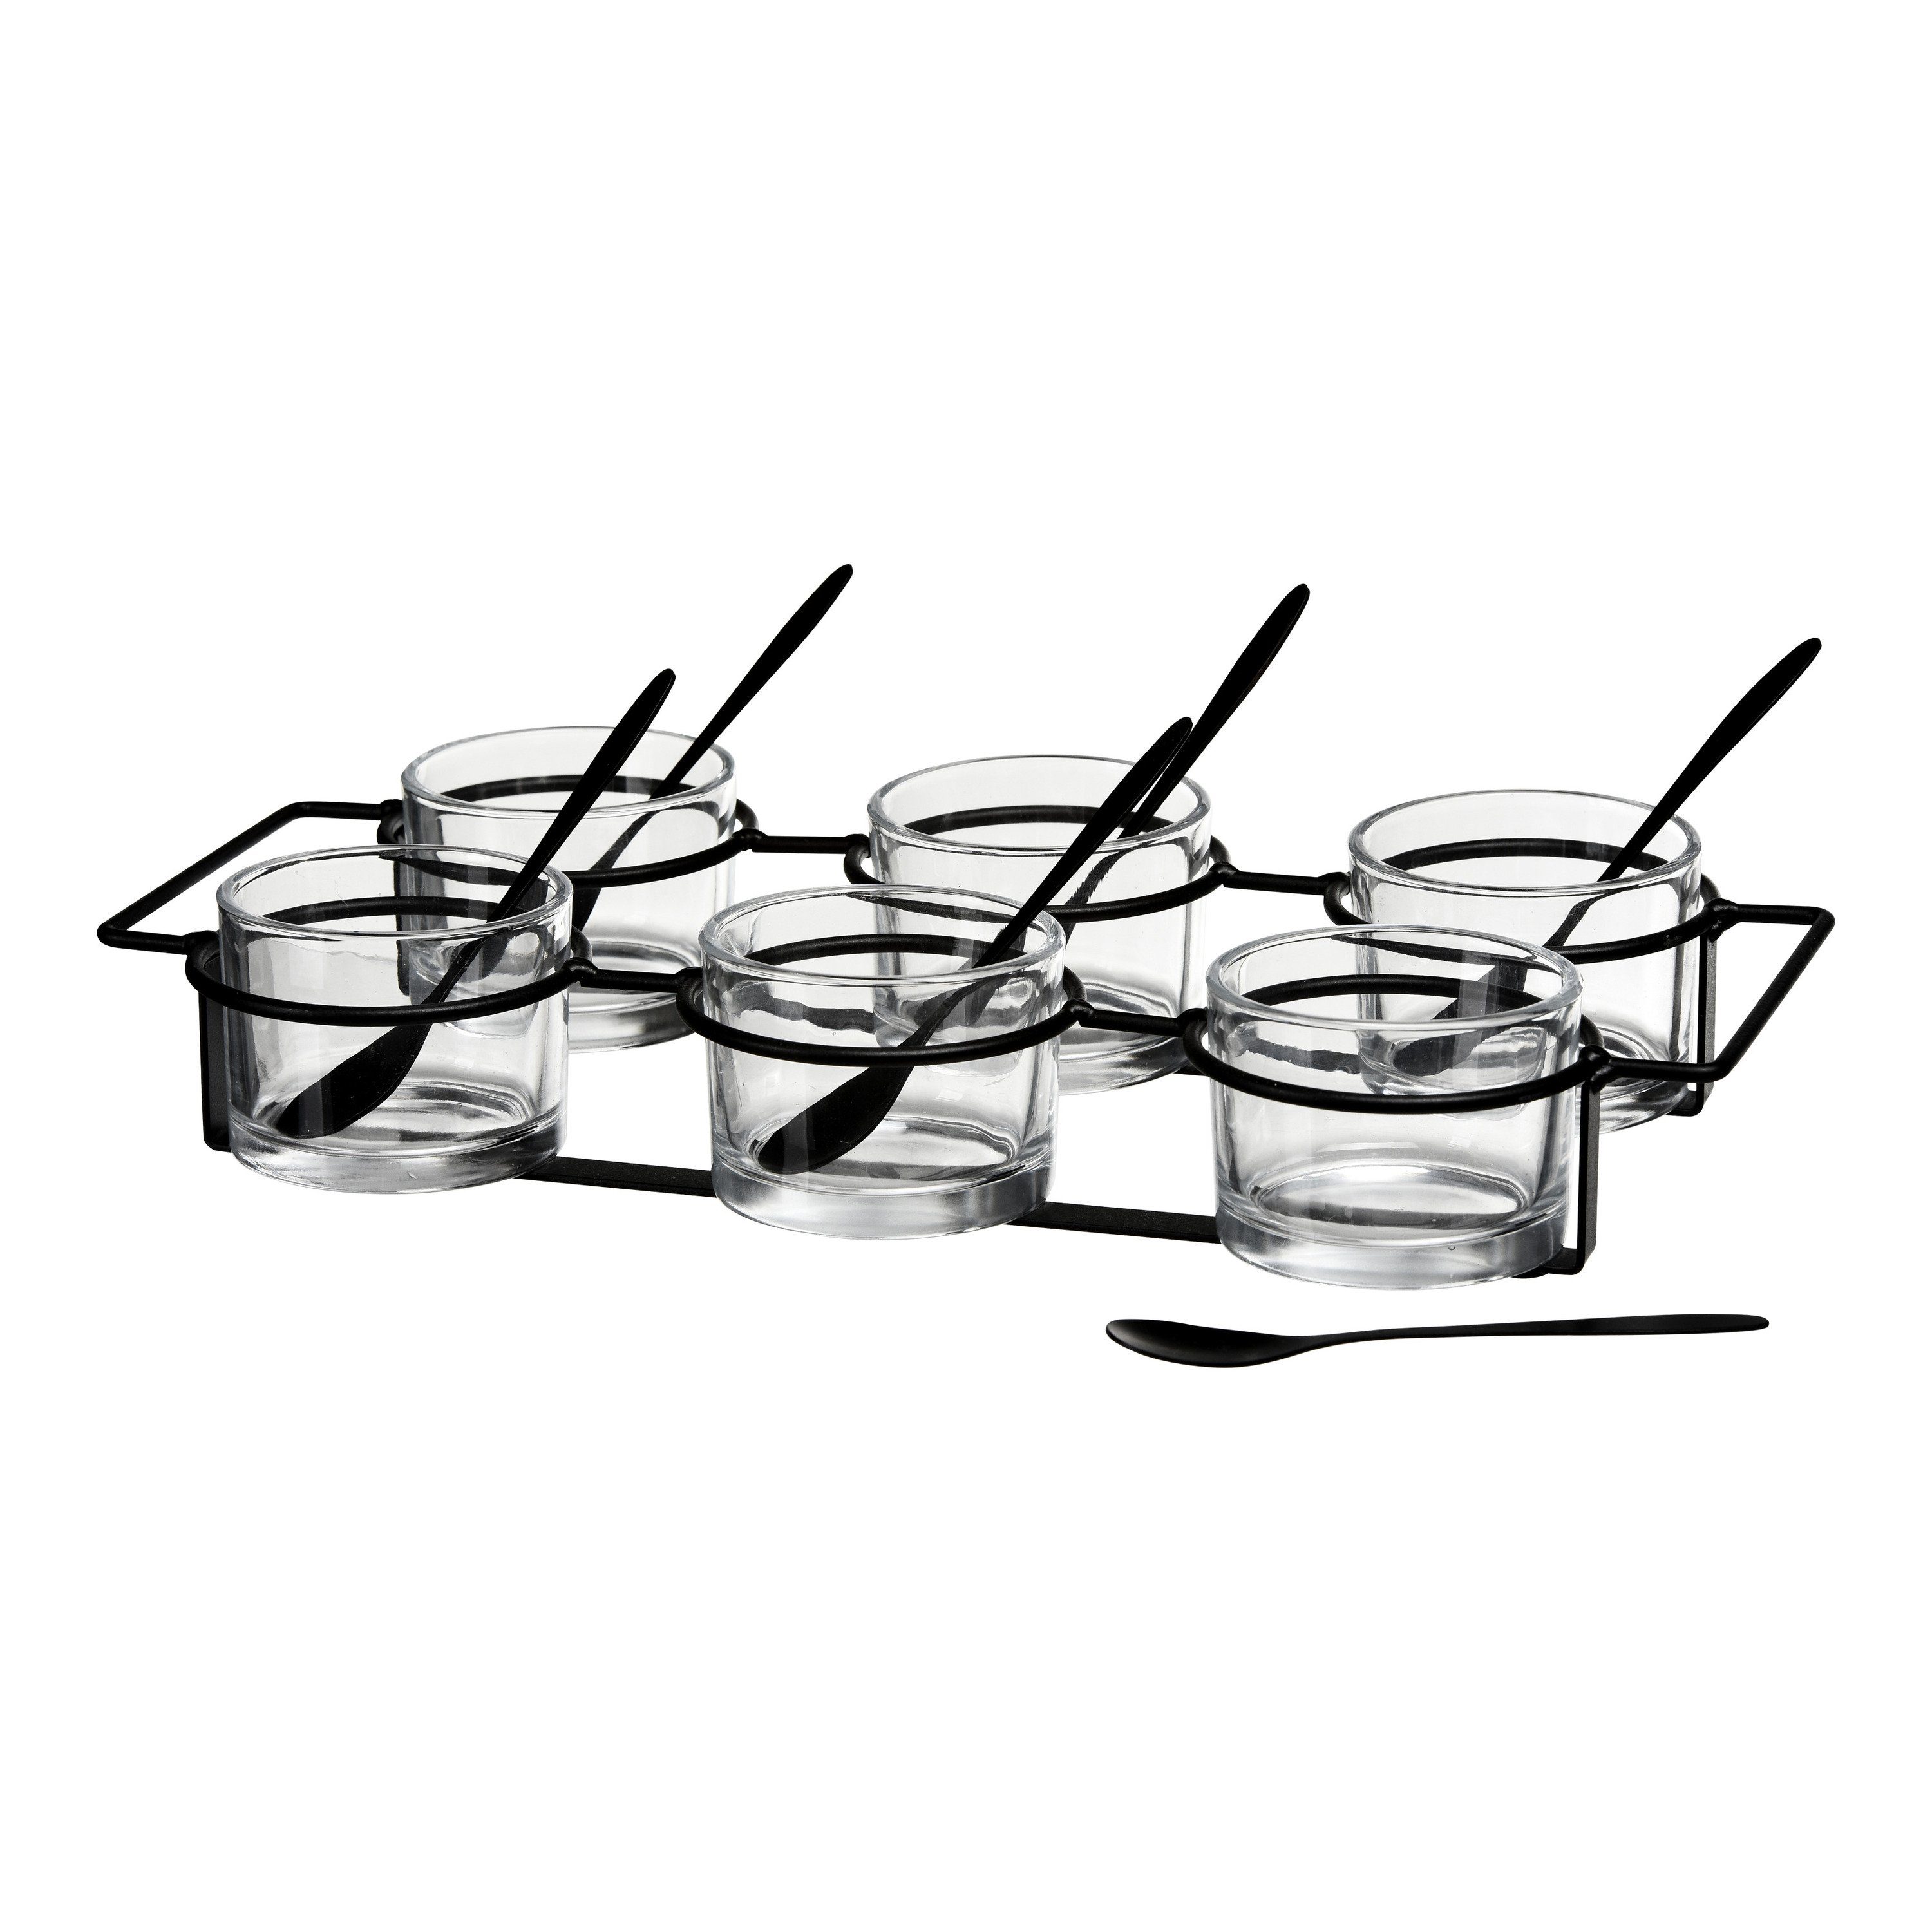 Depot Geschirr-Set Apero-Servier-Set Tuuli, 55% Eisen, 40% Glas, 5% Edelstahl, Aus Eisen, Glas, Edelstahl, 13-teilig Schwarz